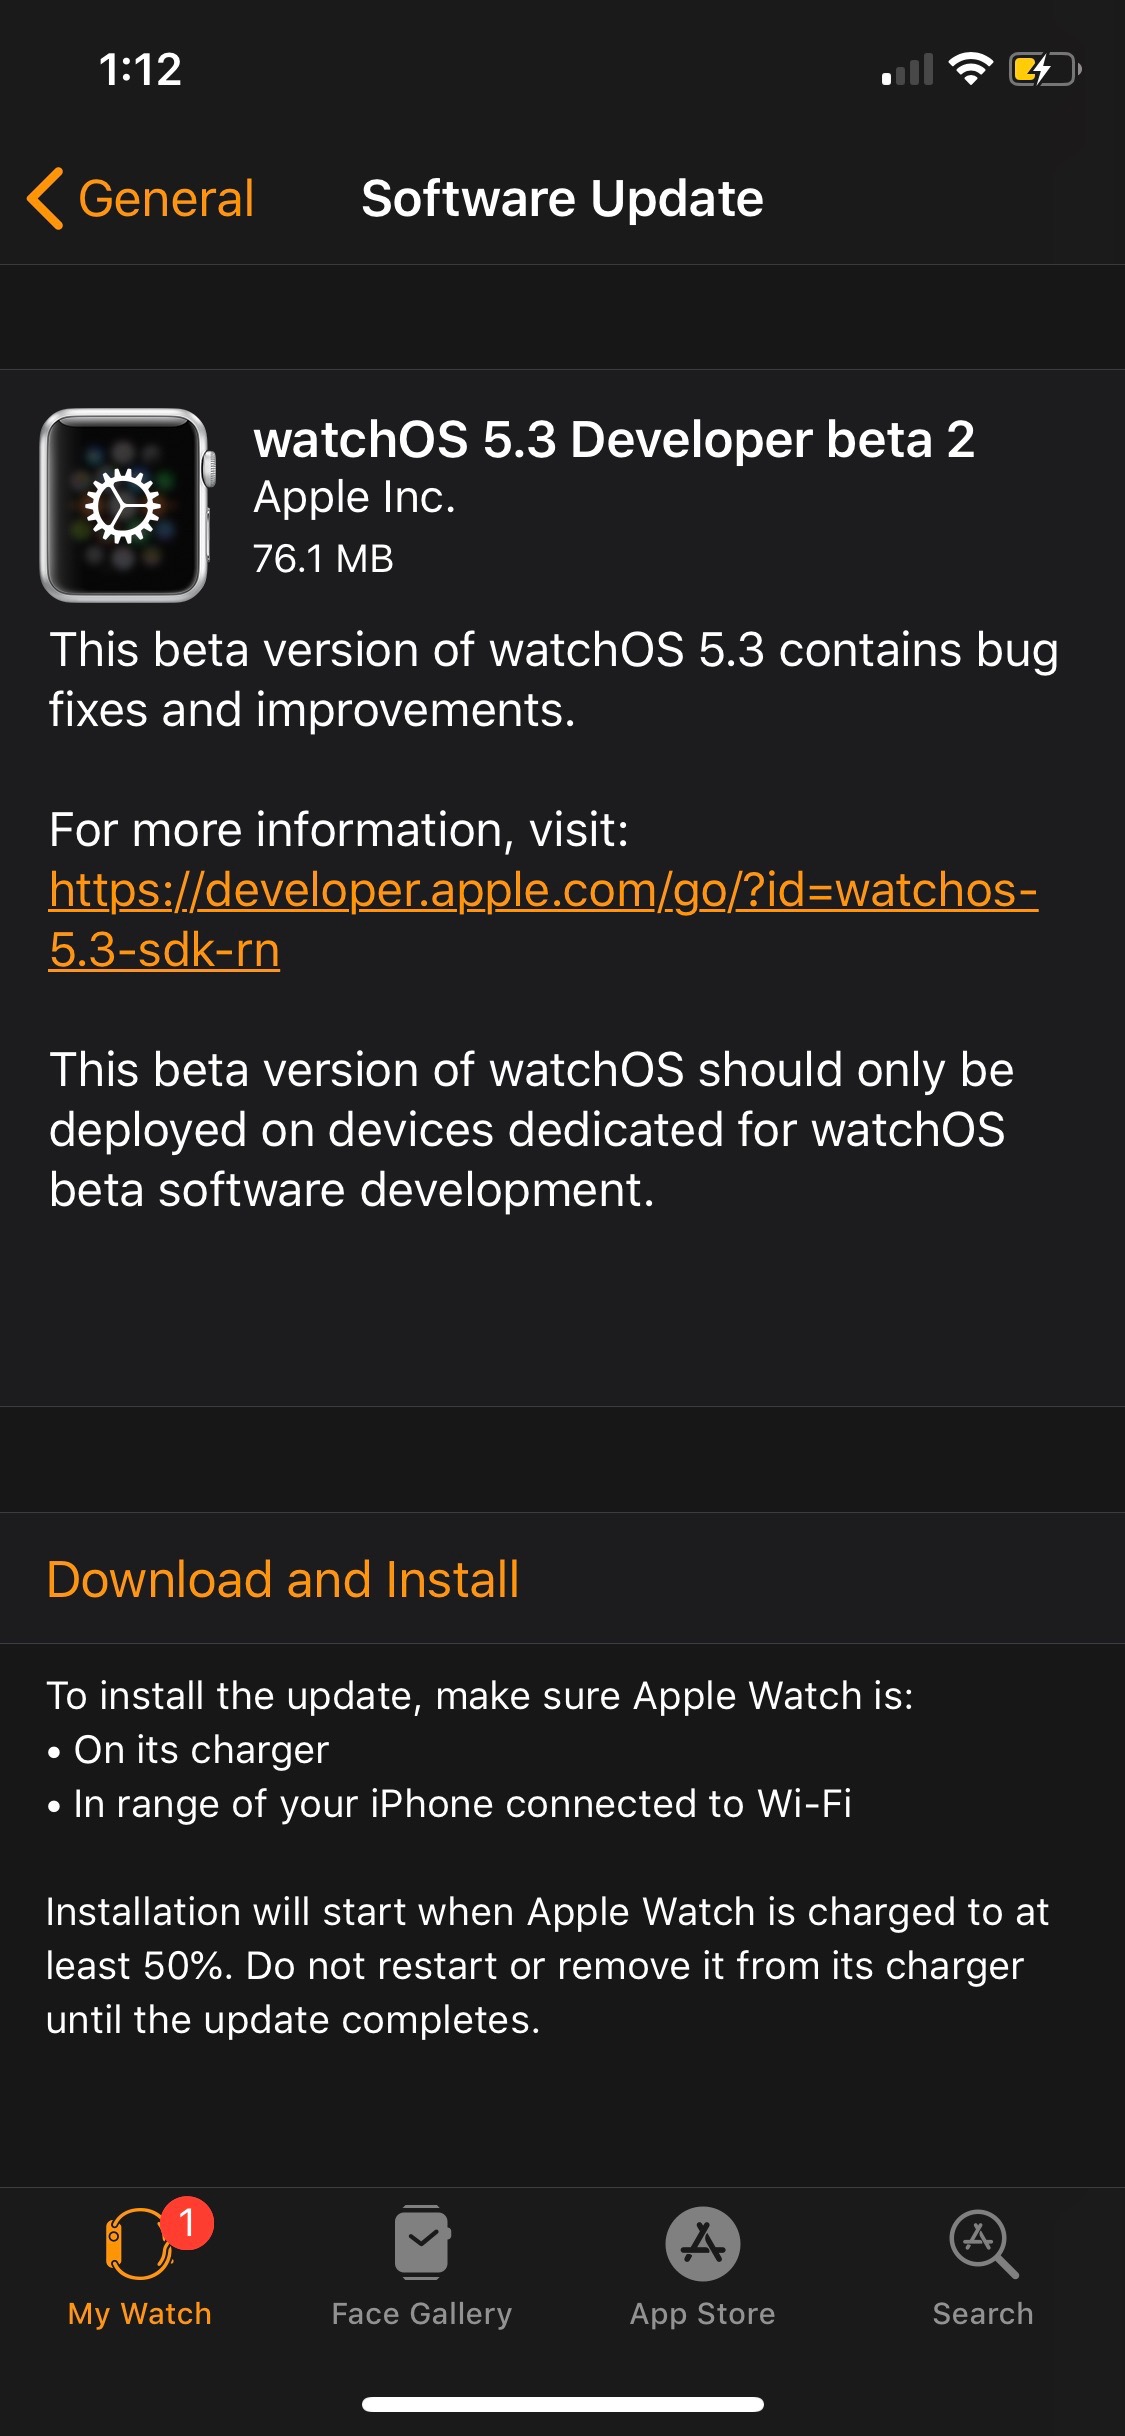 Apple Seeds watchOS 5.3 Beta 2 to Developers [Download]